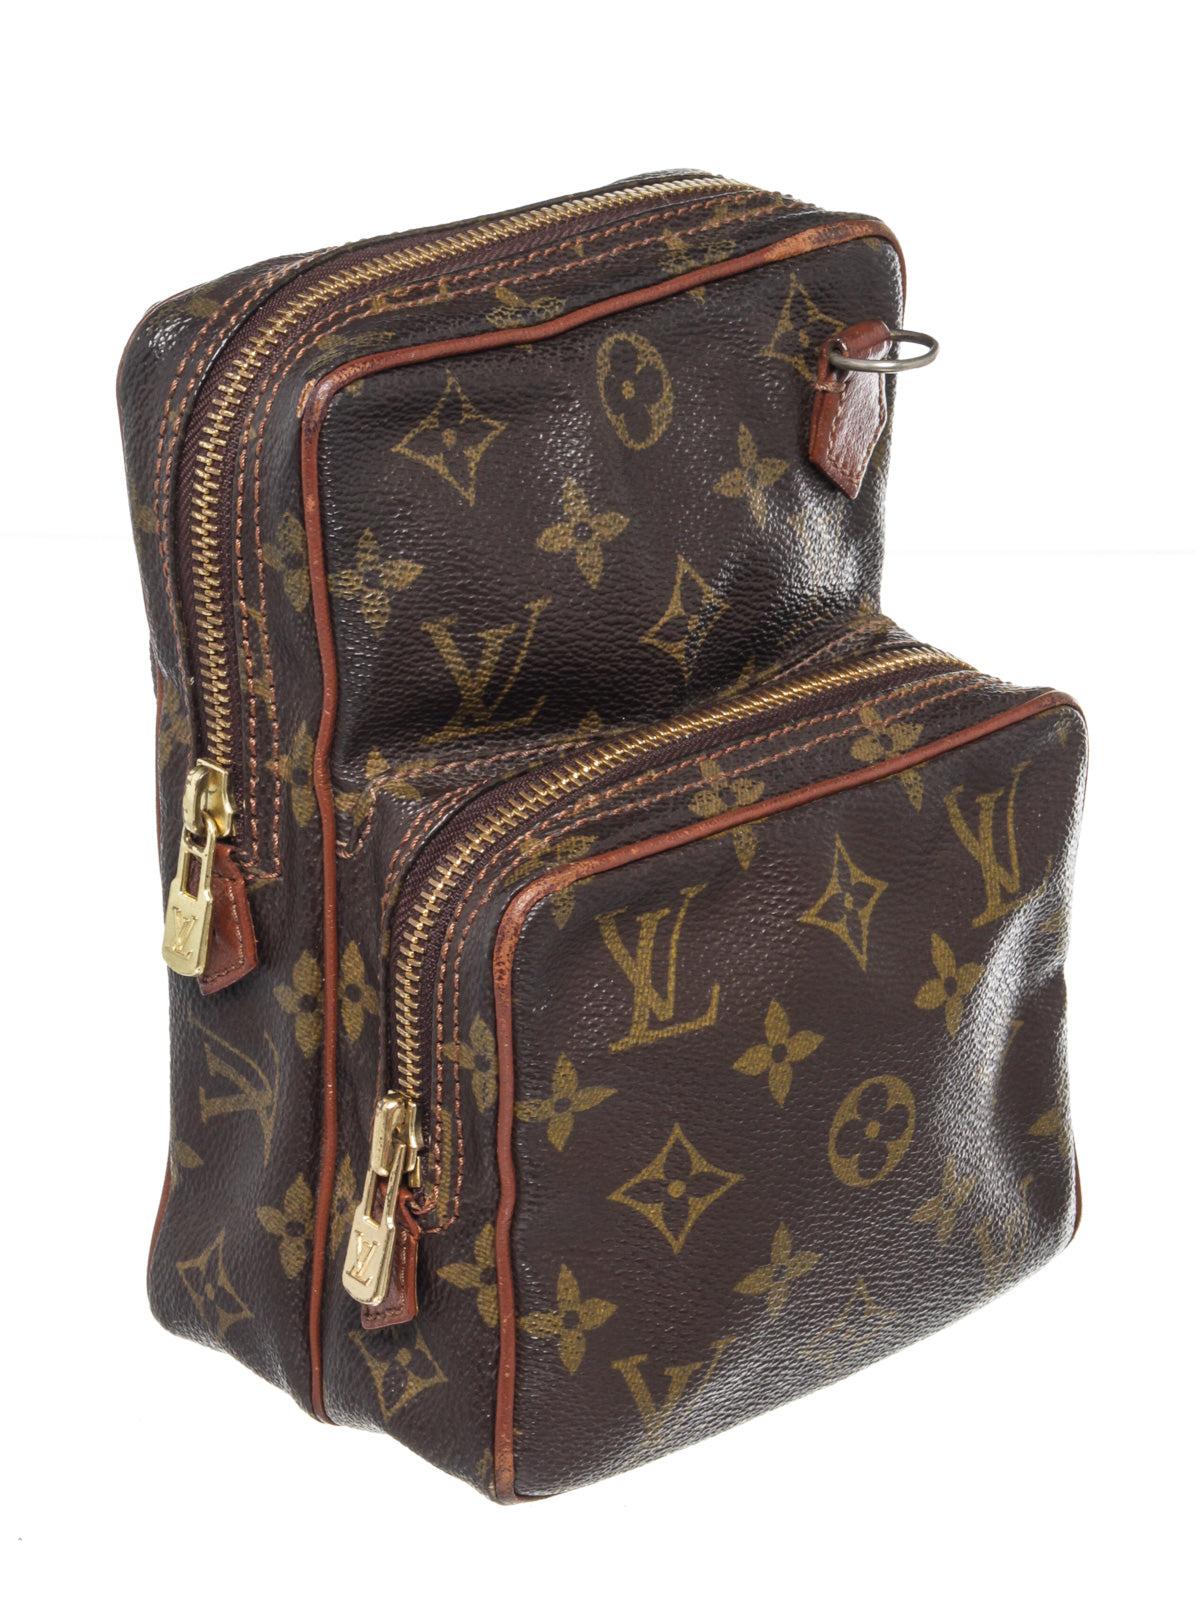 Louis Vuitton Brown Monogram Mini Amazon Shoulder Bag with monogram canvas, gold-tone hardware, trim tan vachetta leather, exterior zip pocket, shoulder strap and zipper closure.

58579MSC